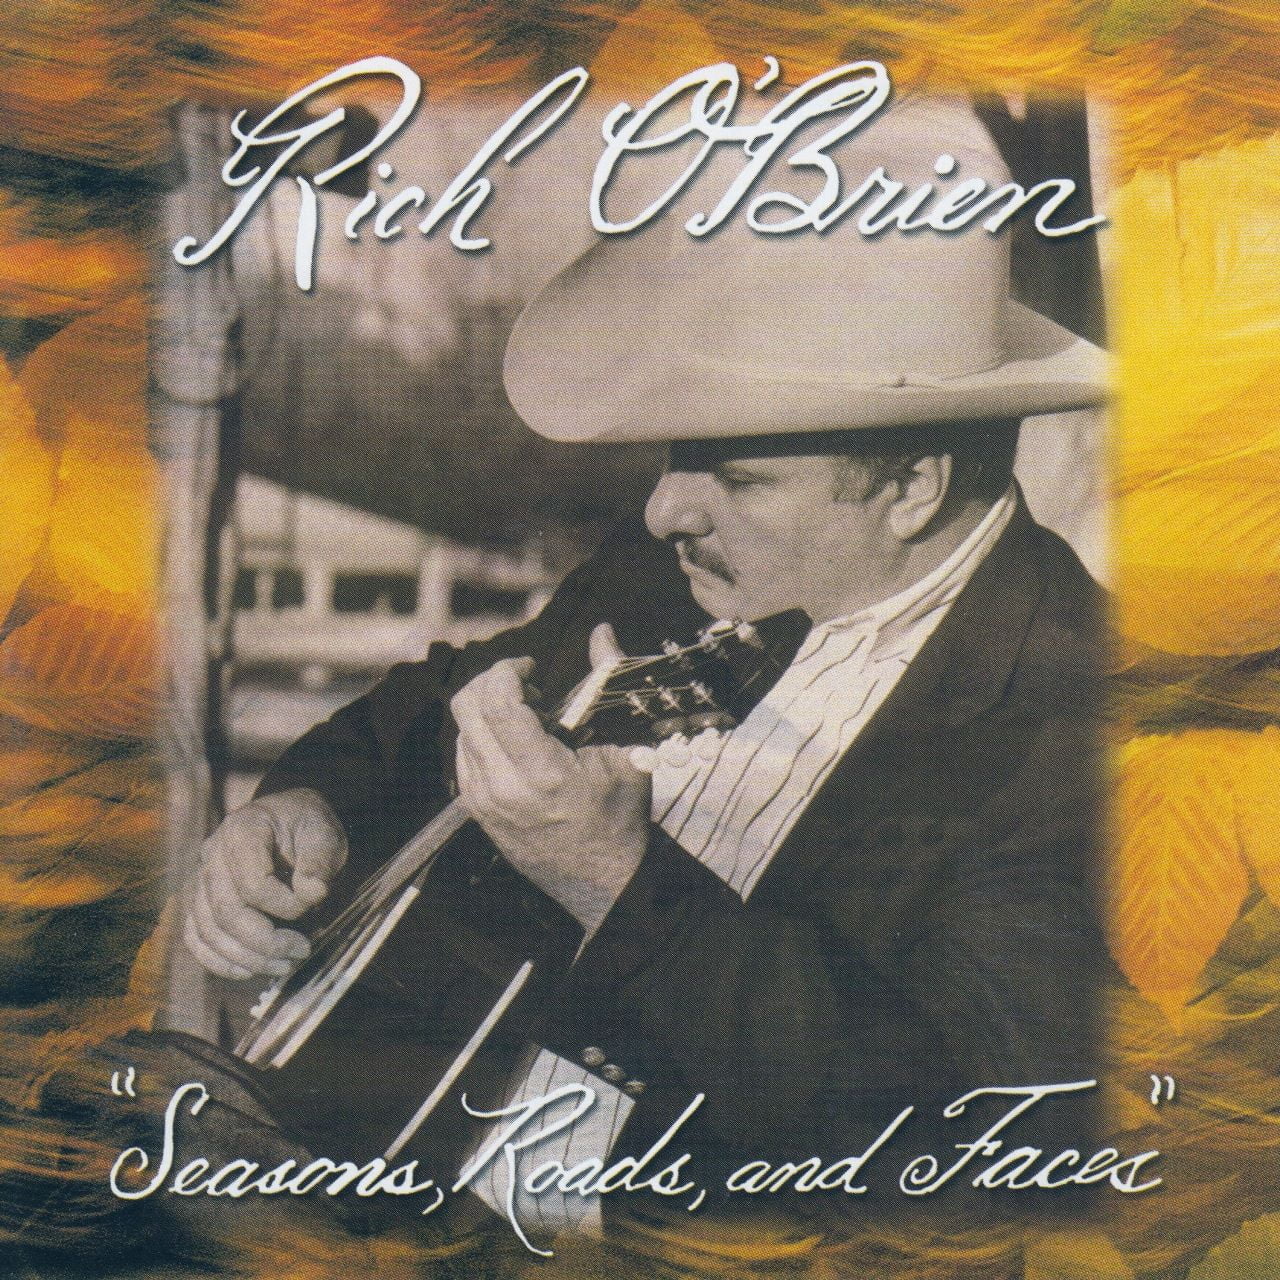 Rich O'Brien - Seasons, Roads, And Faces cover album